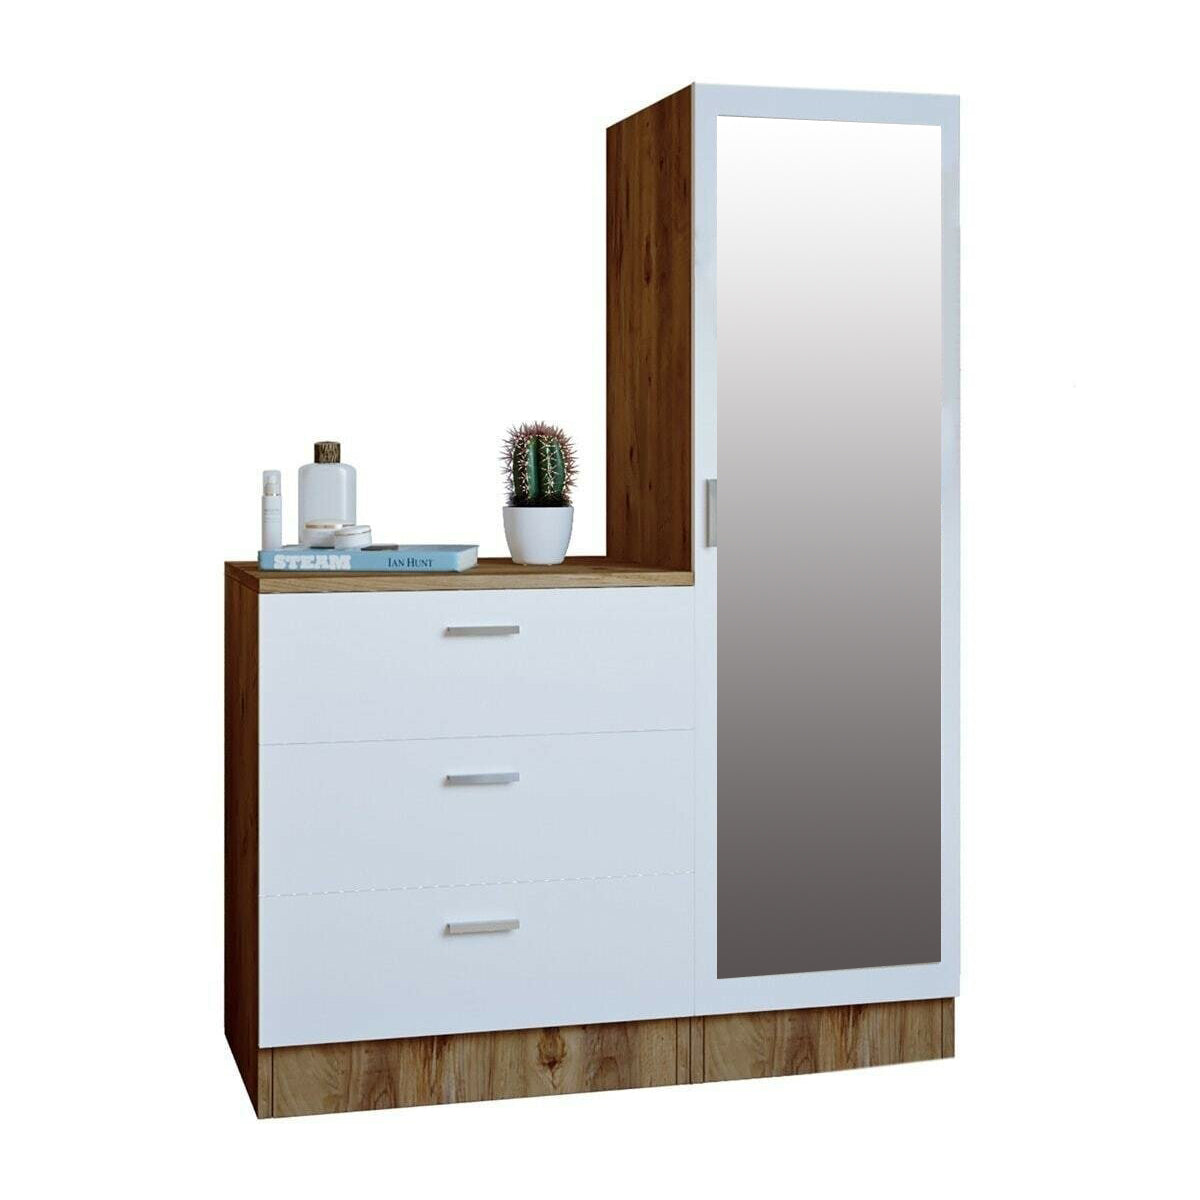 Dresser with drawer unit 140 x 100 cm - SHR203